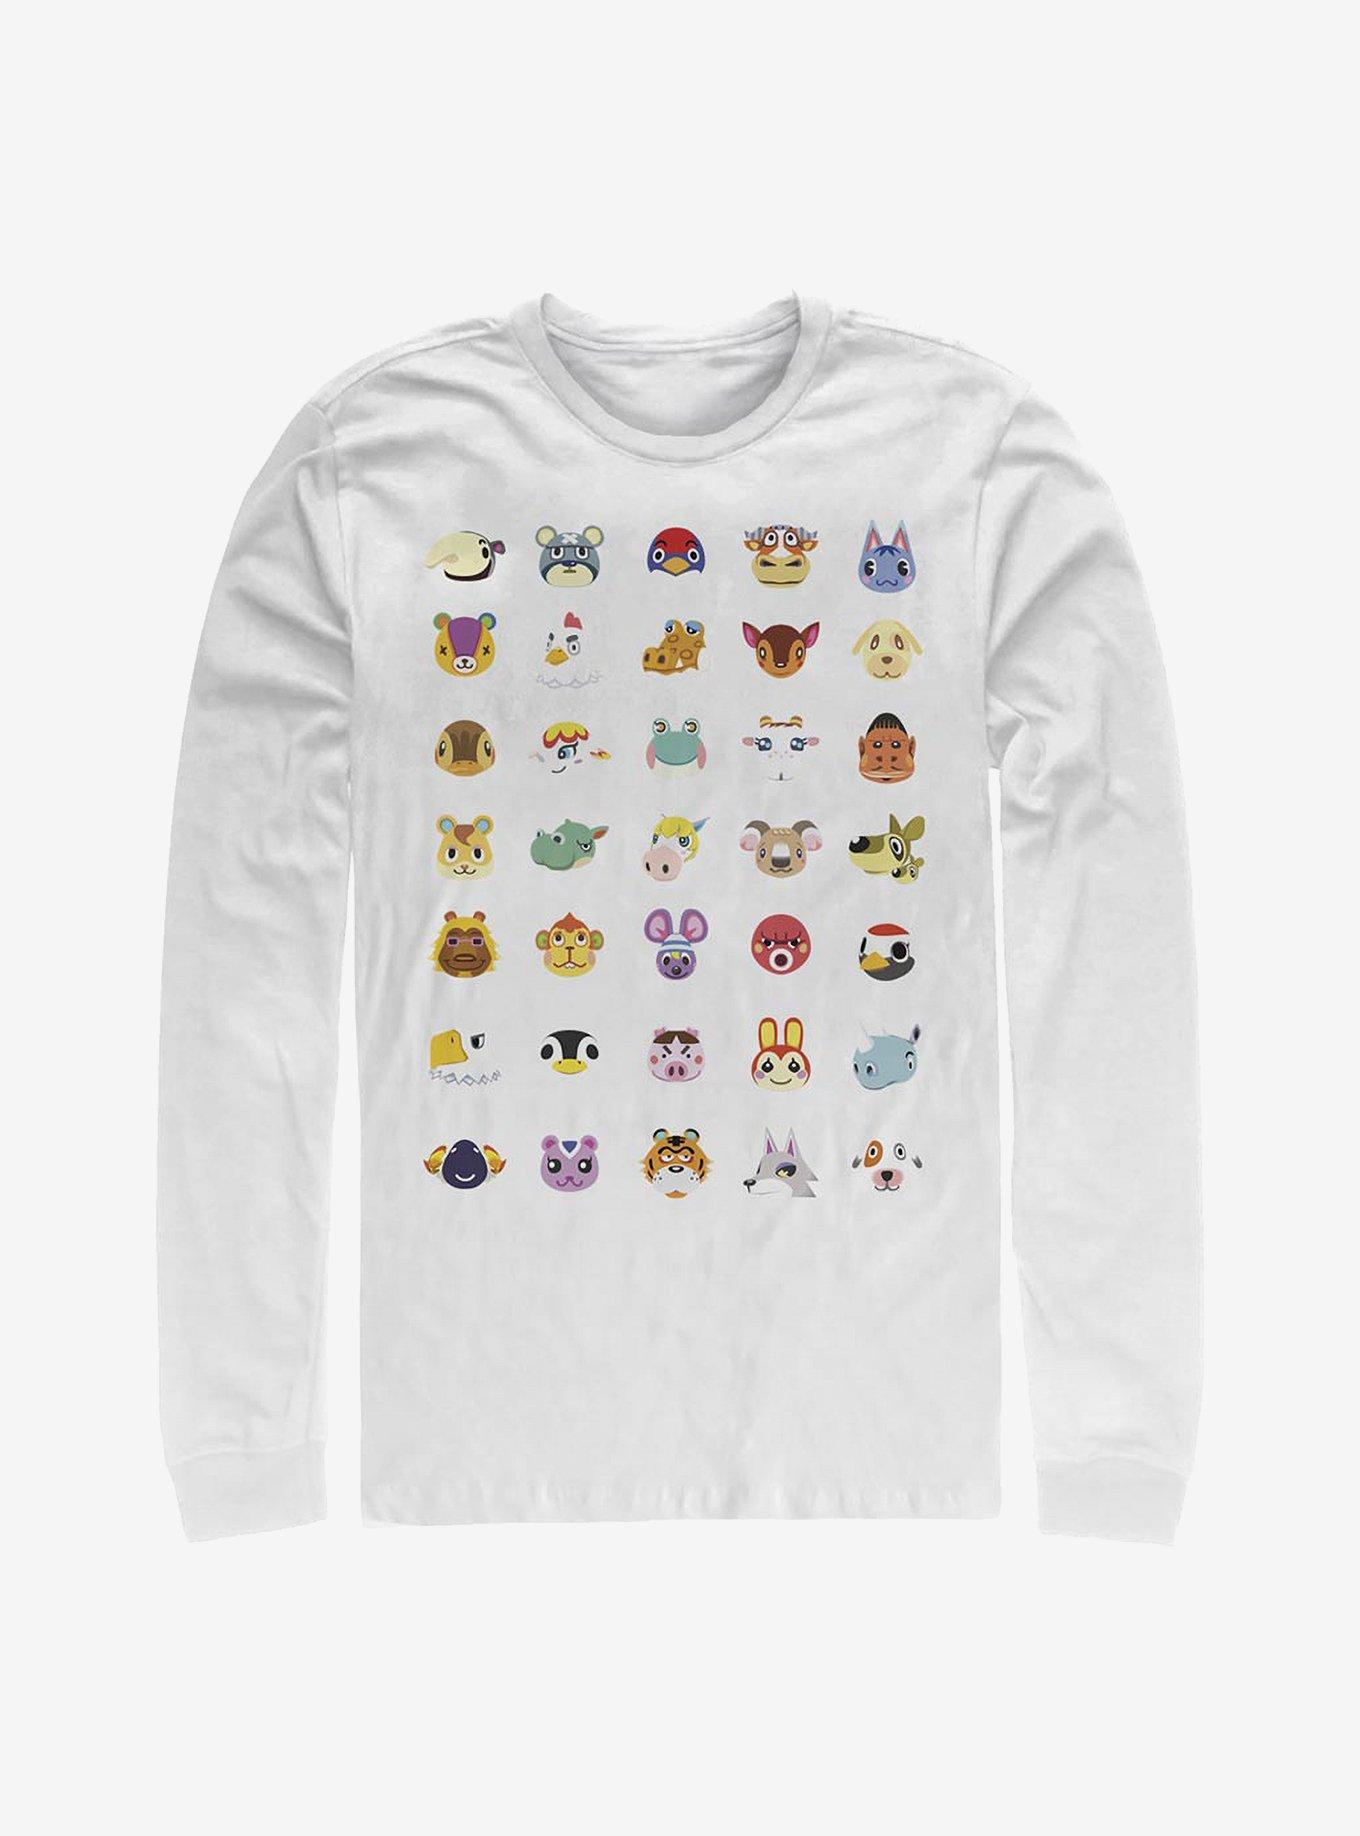 Nintendo Animal Crossing Character Heads Long-Sleeve T-Shirt, WHITE, hi-res